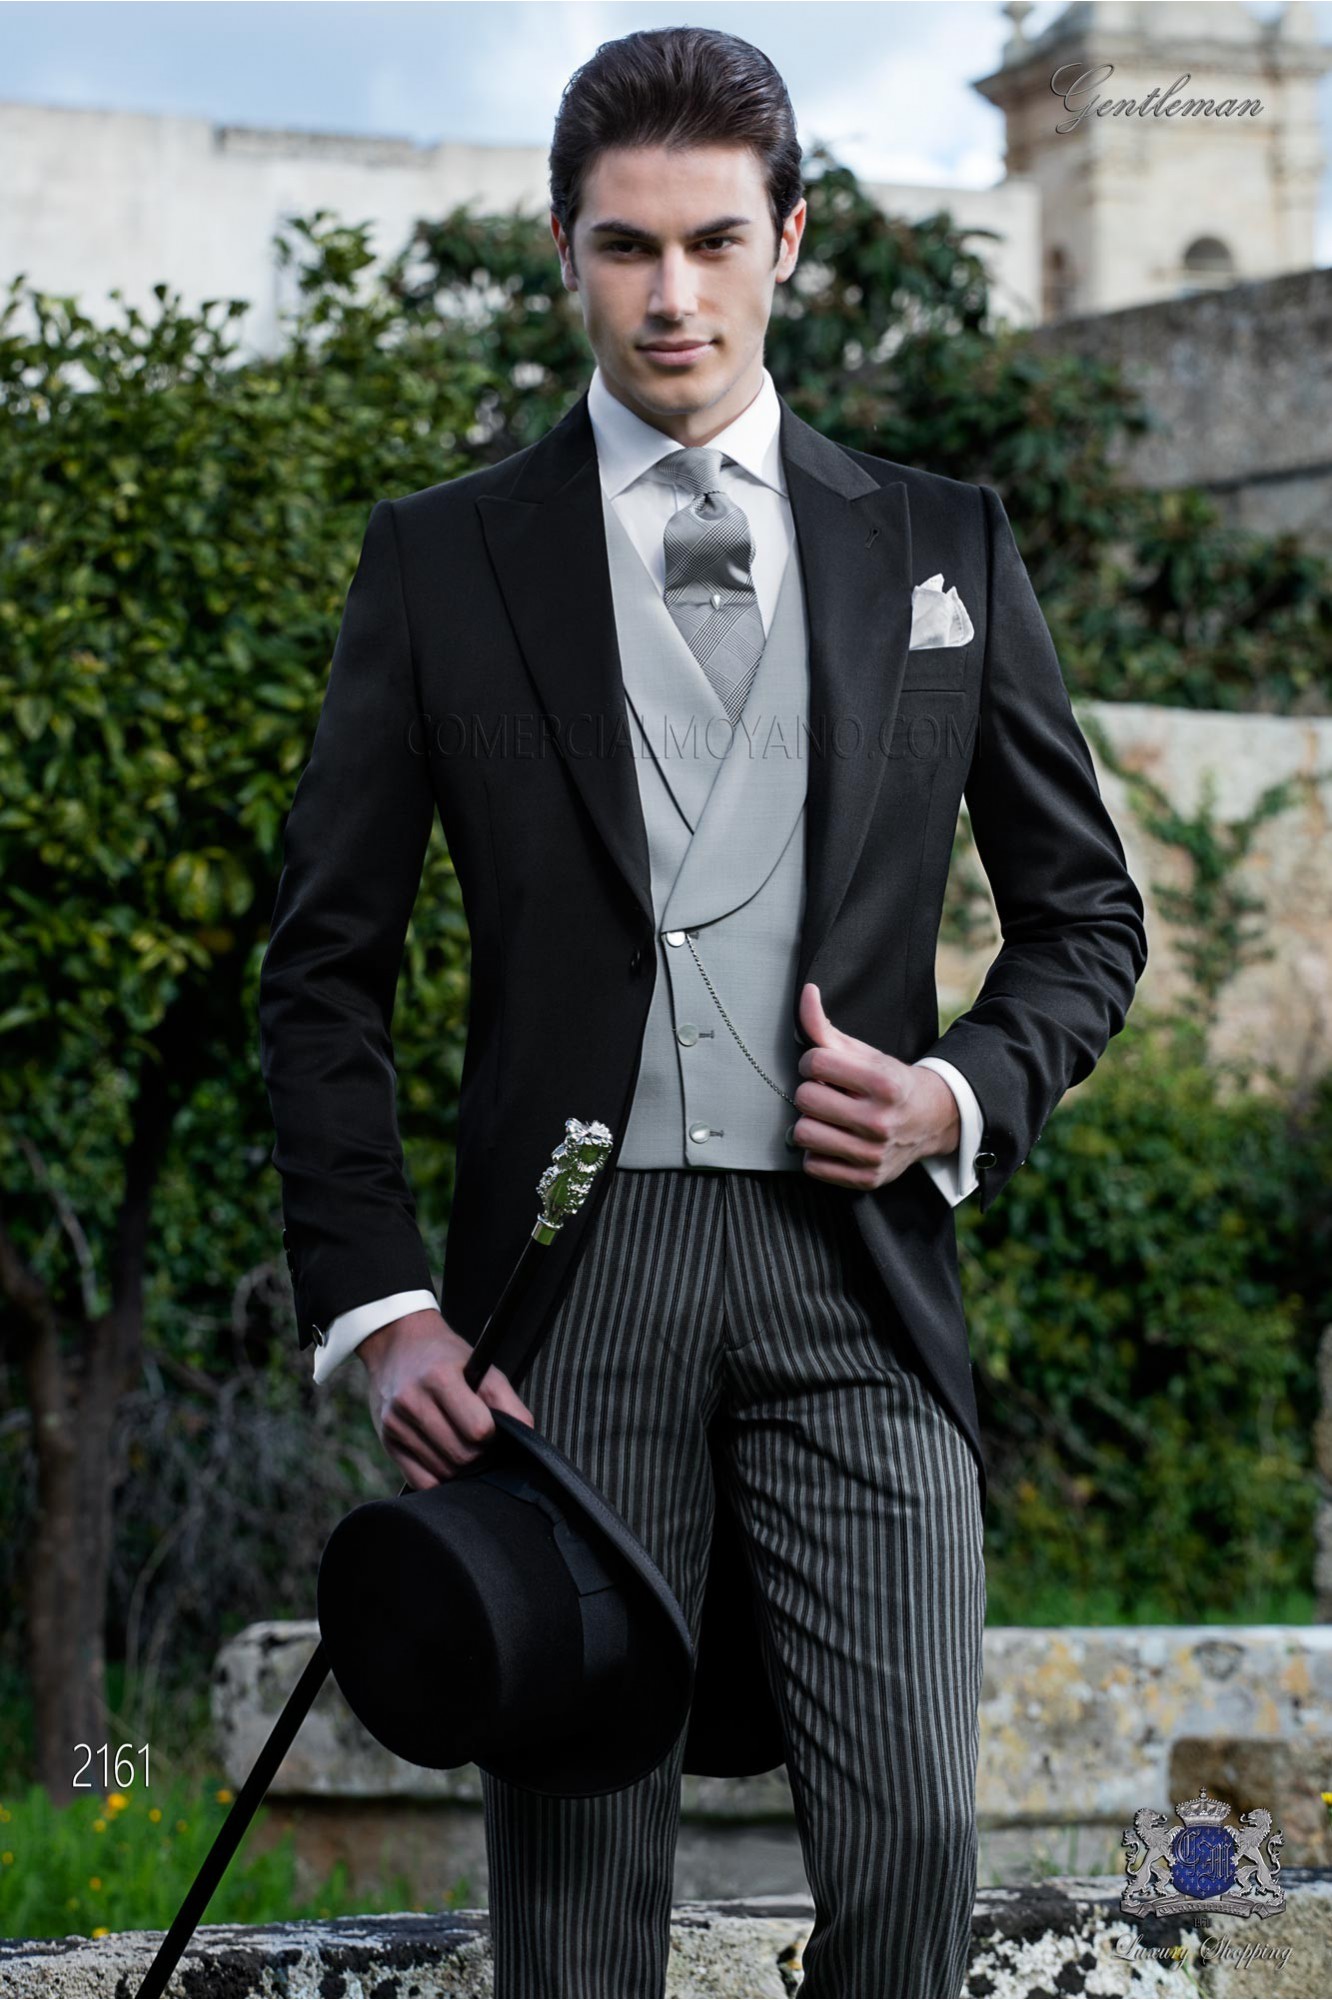 Italian tailoring frock coat. Fabric 100% black wool trousers label model 2161 Mario Moyano